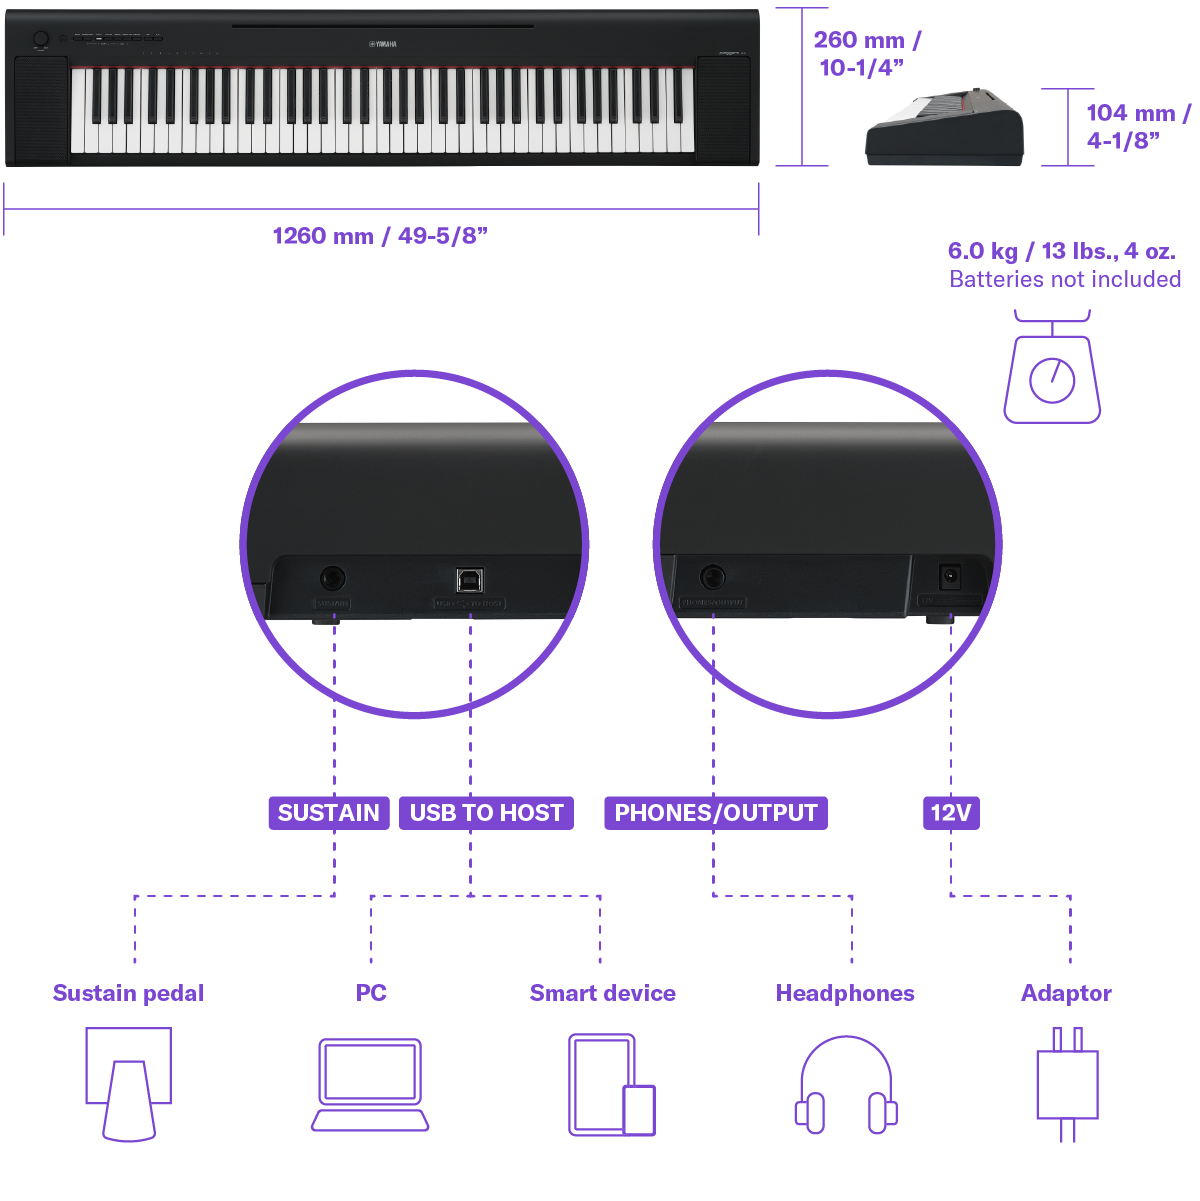 Yamaha Piaggero NP-35 76-key Portable Piano - Black